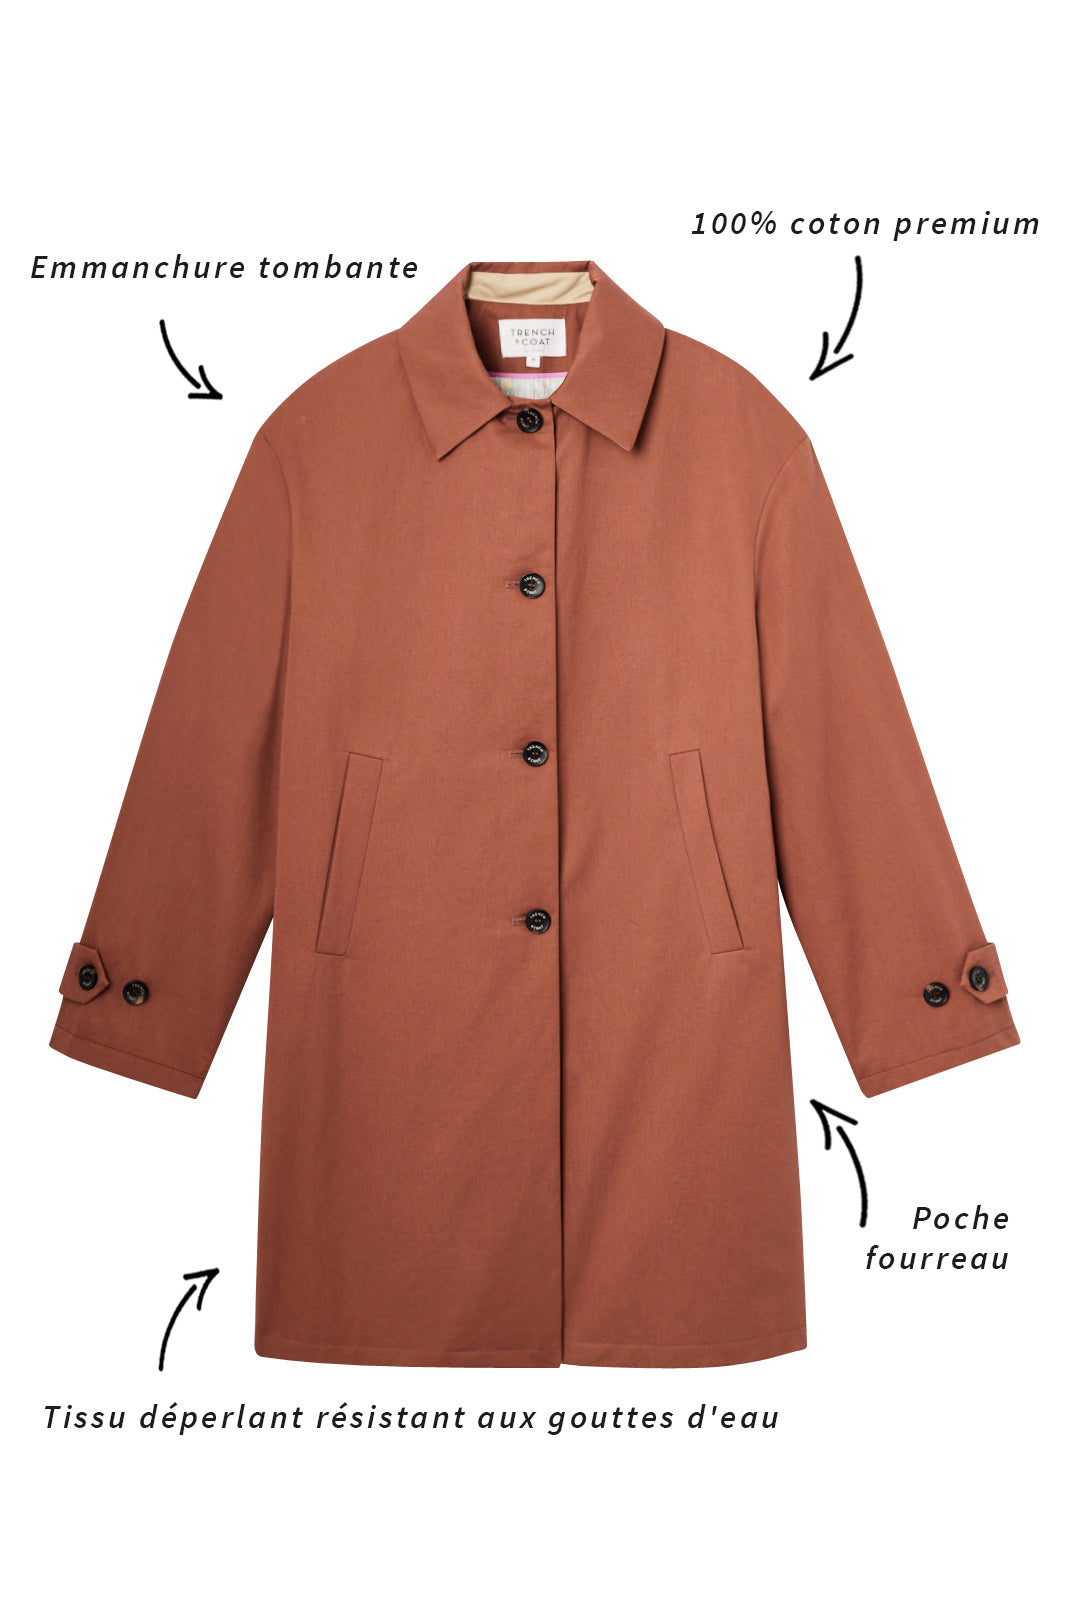 Sleek DAX-Redding coat in pure premium cotton, glossy brown